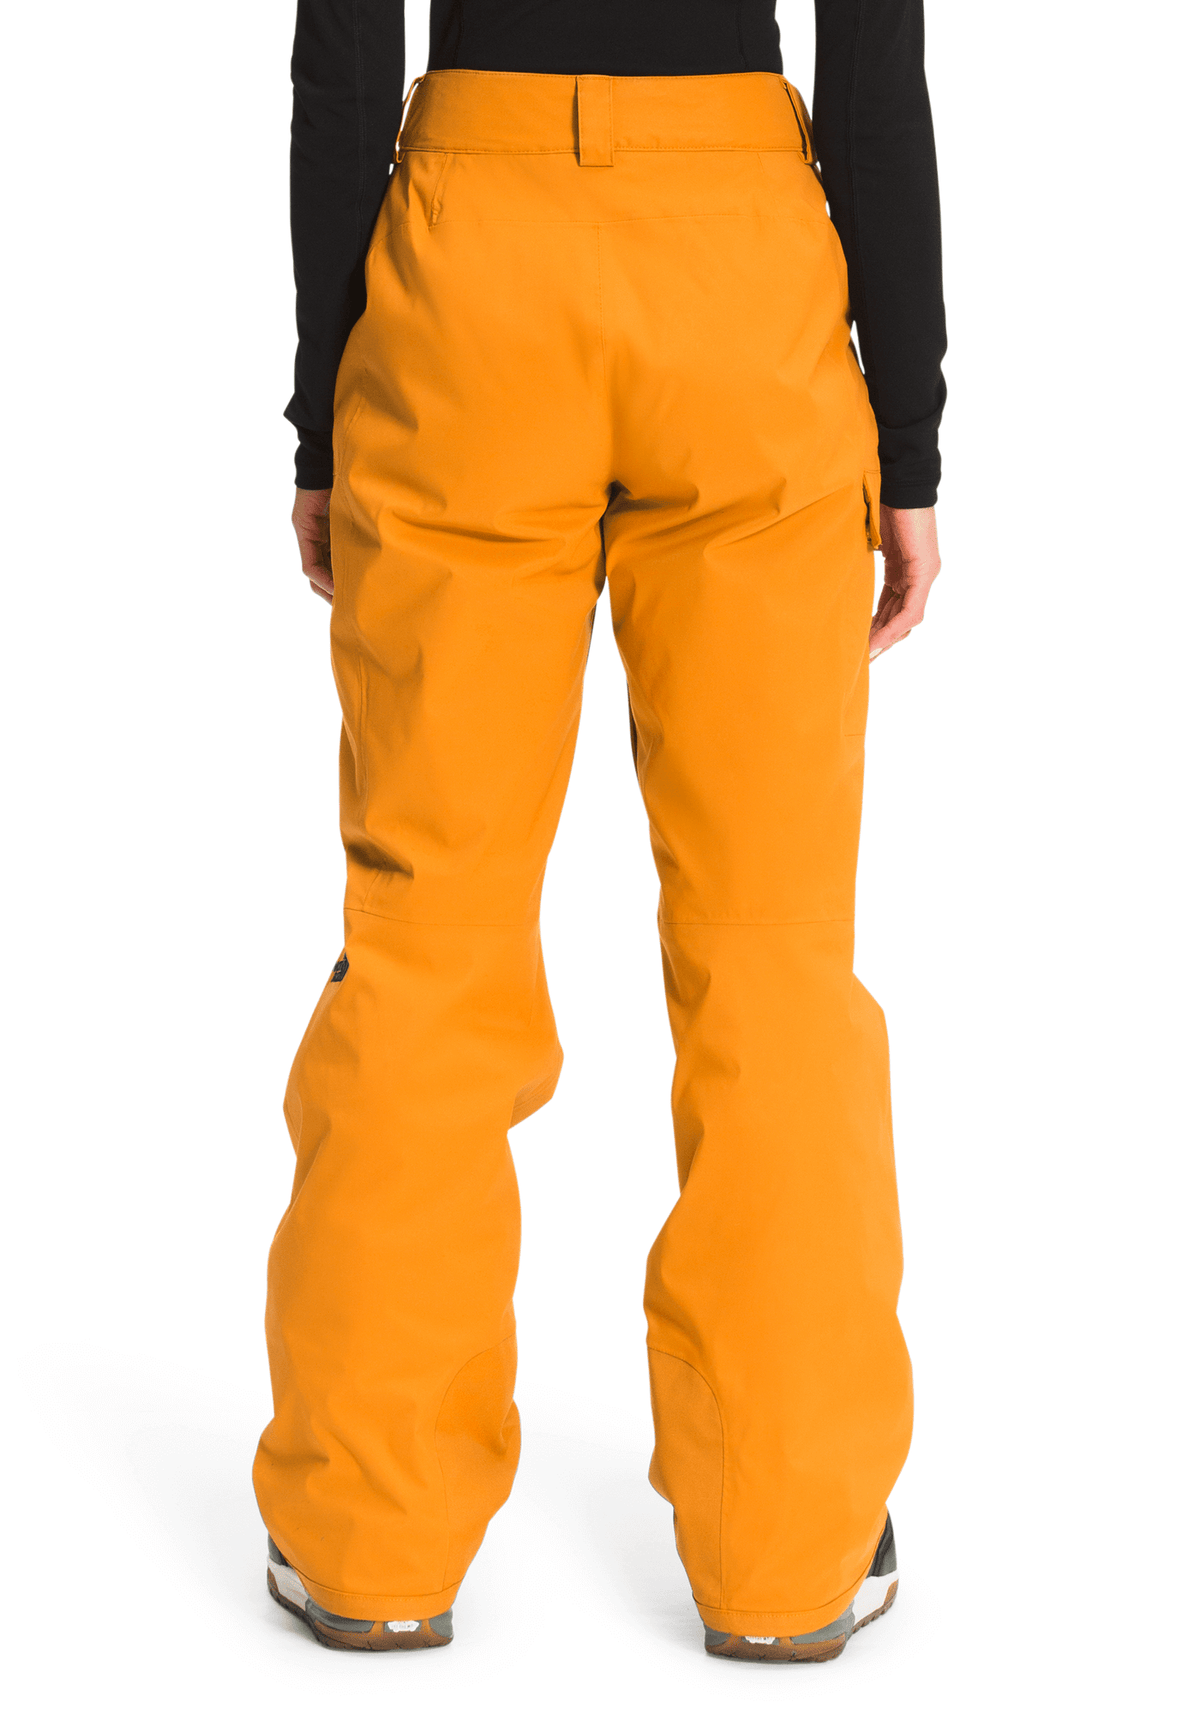 The North Face Freedom ski pant in orange